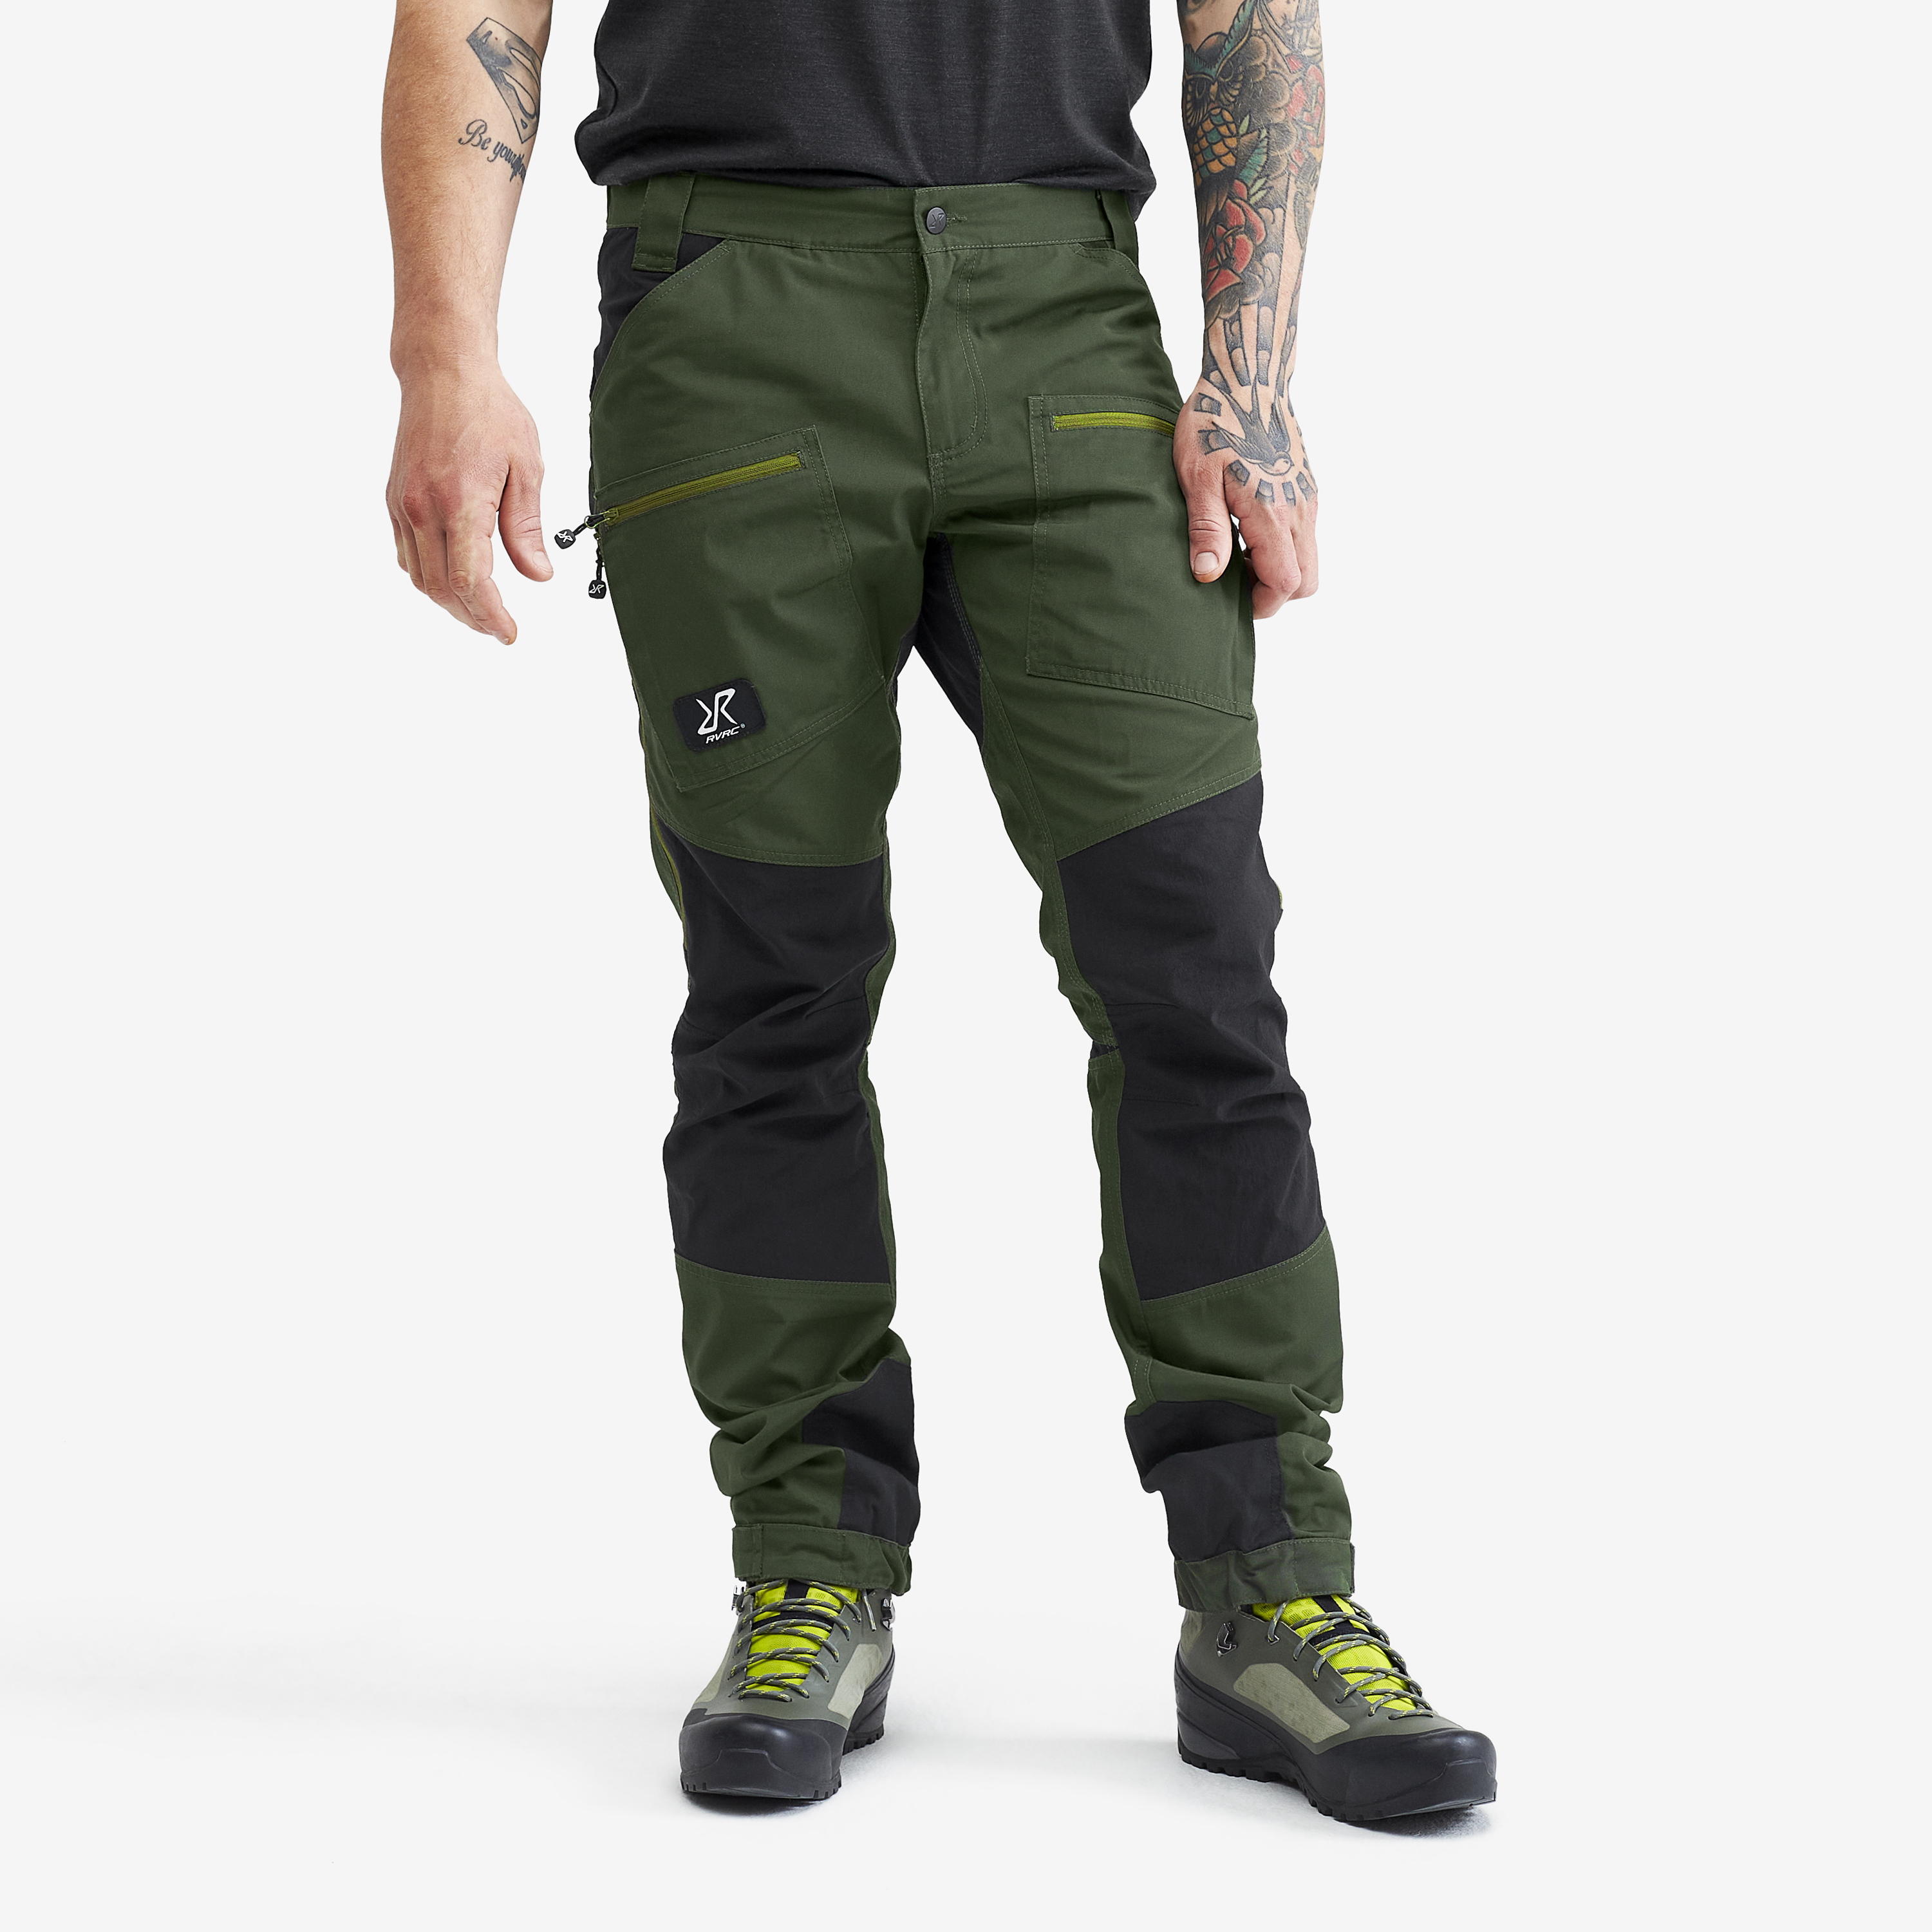 Nordwand Pro Pants Green/Black Herren